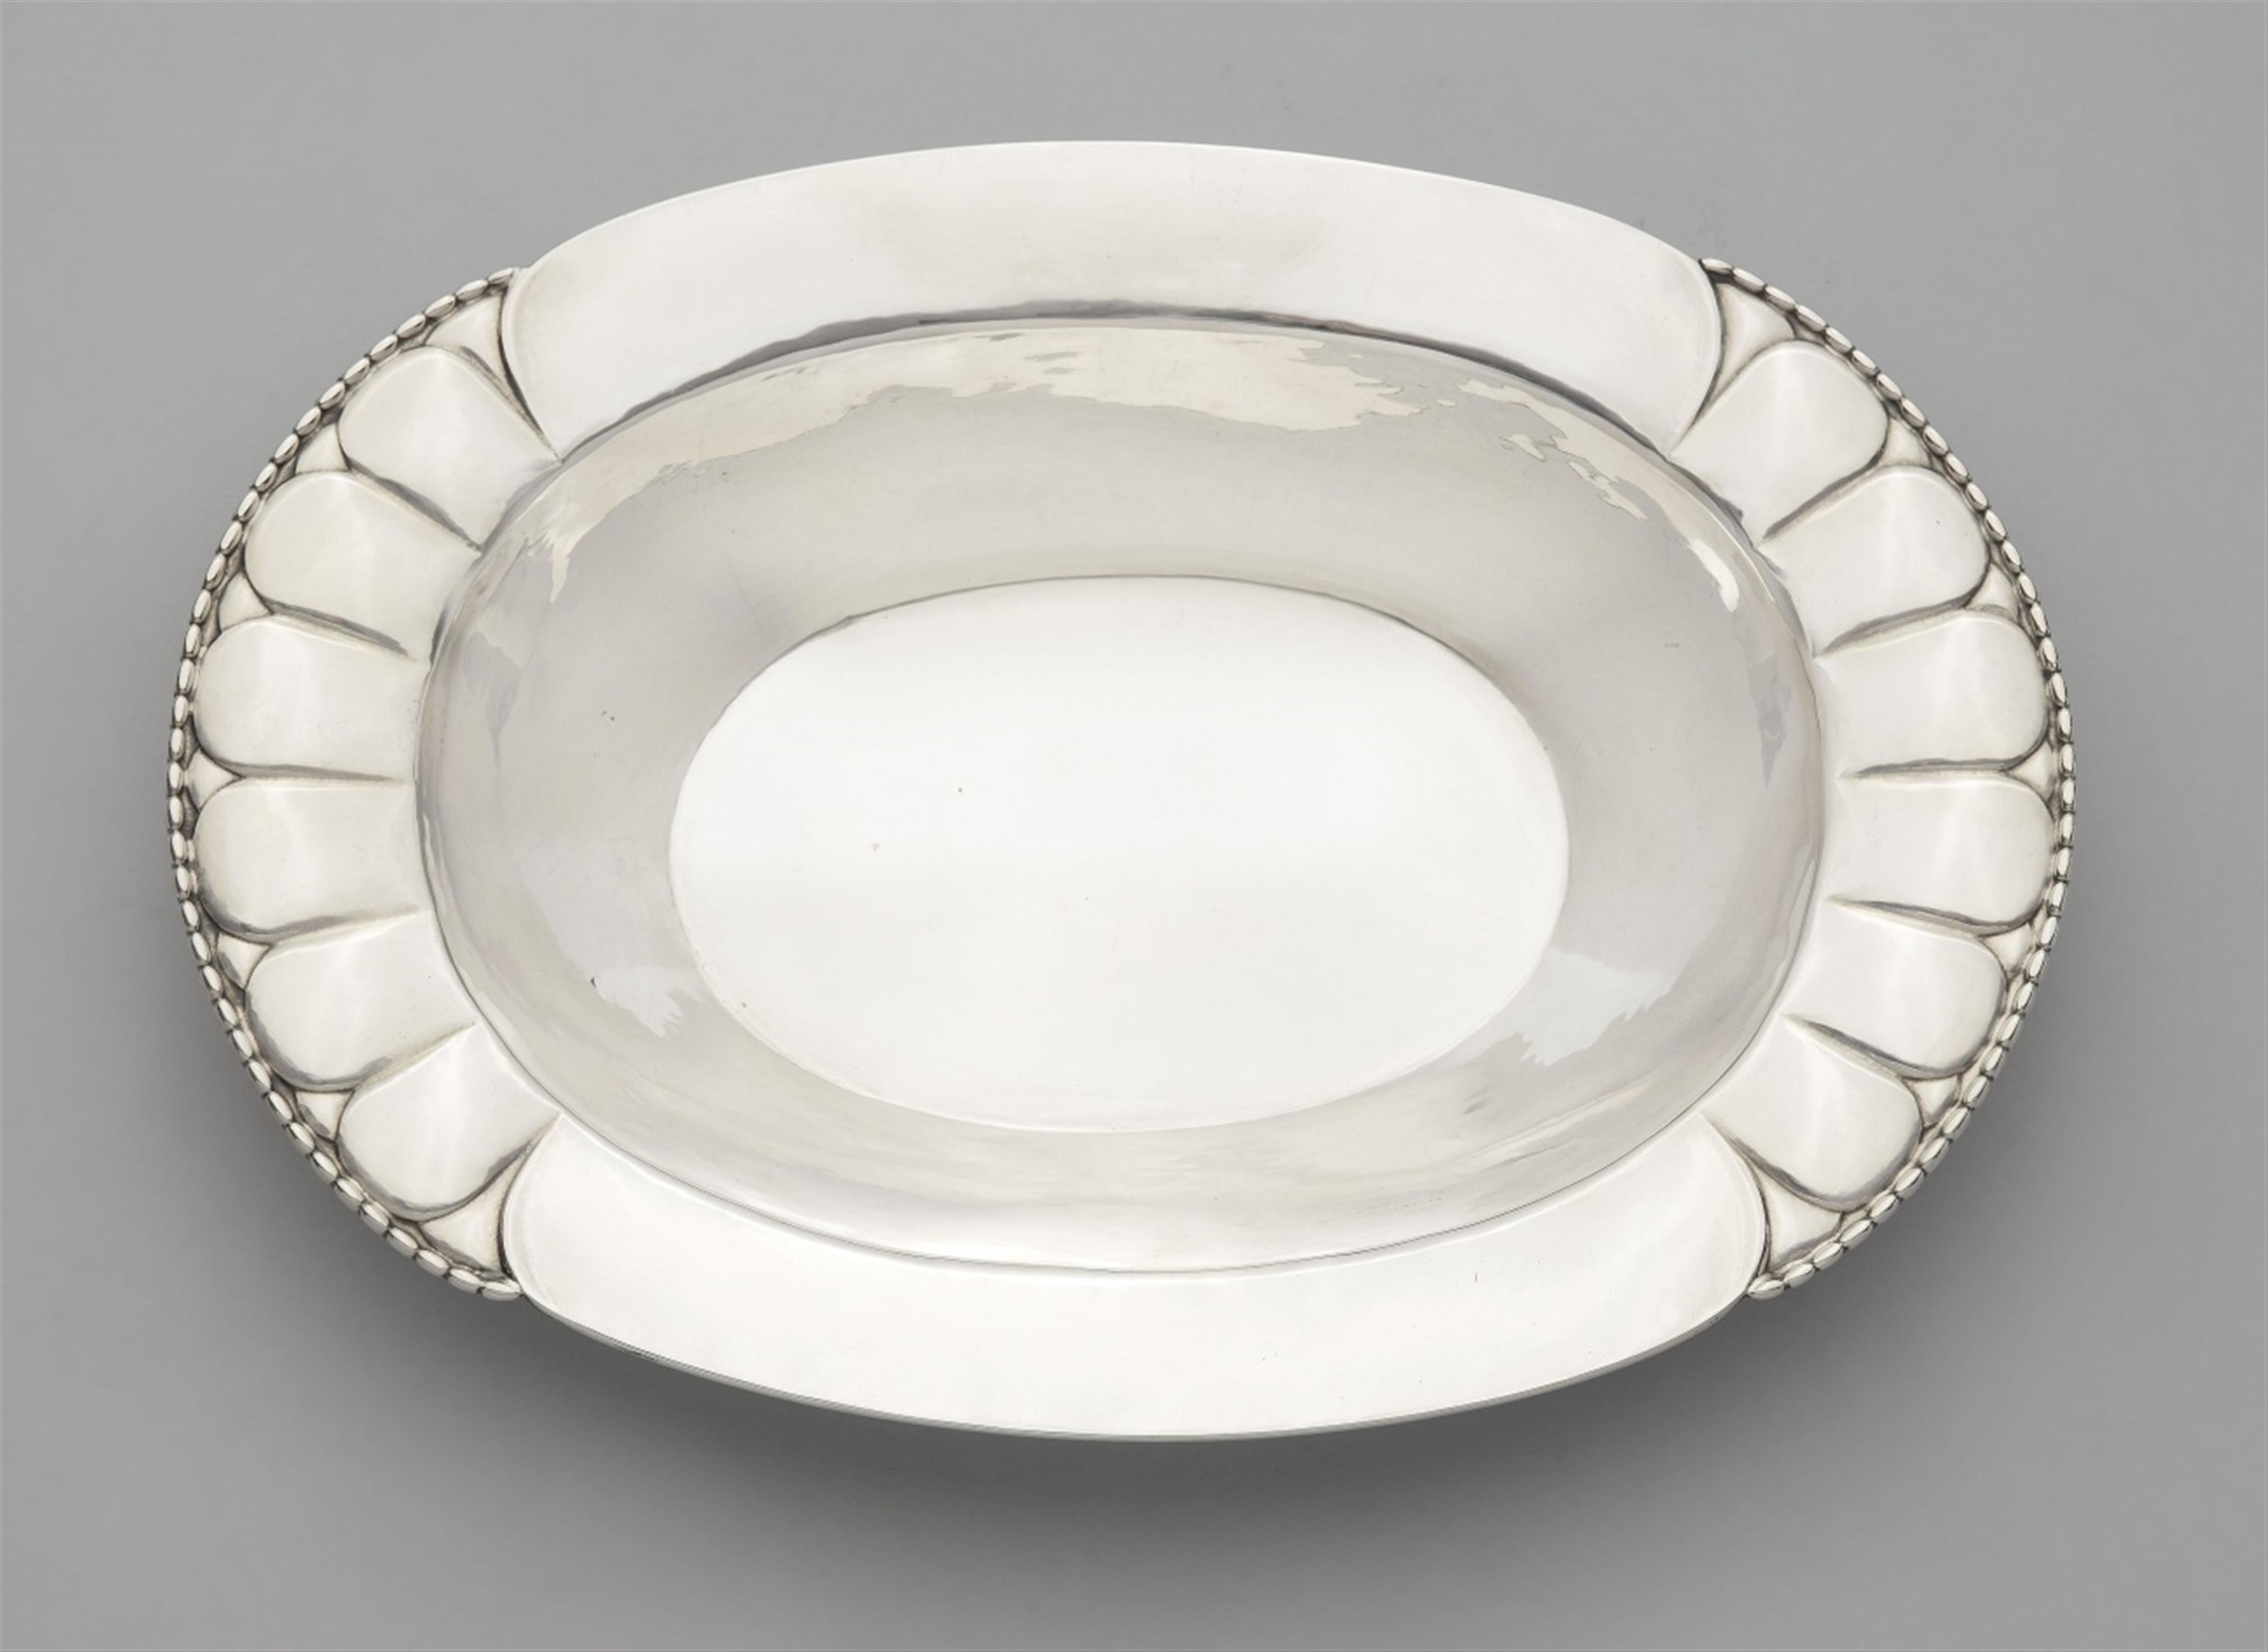 A silver sweetmeats dish by Georg Jensen, model no. 3 - image-1